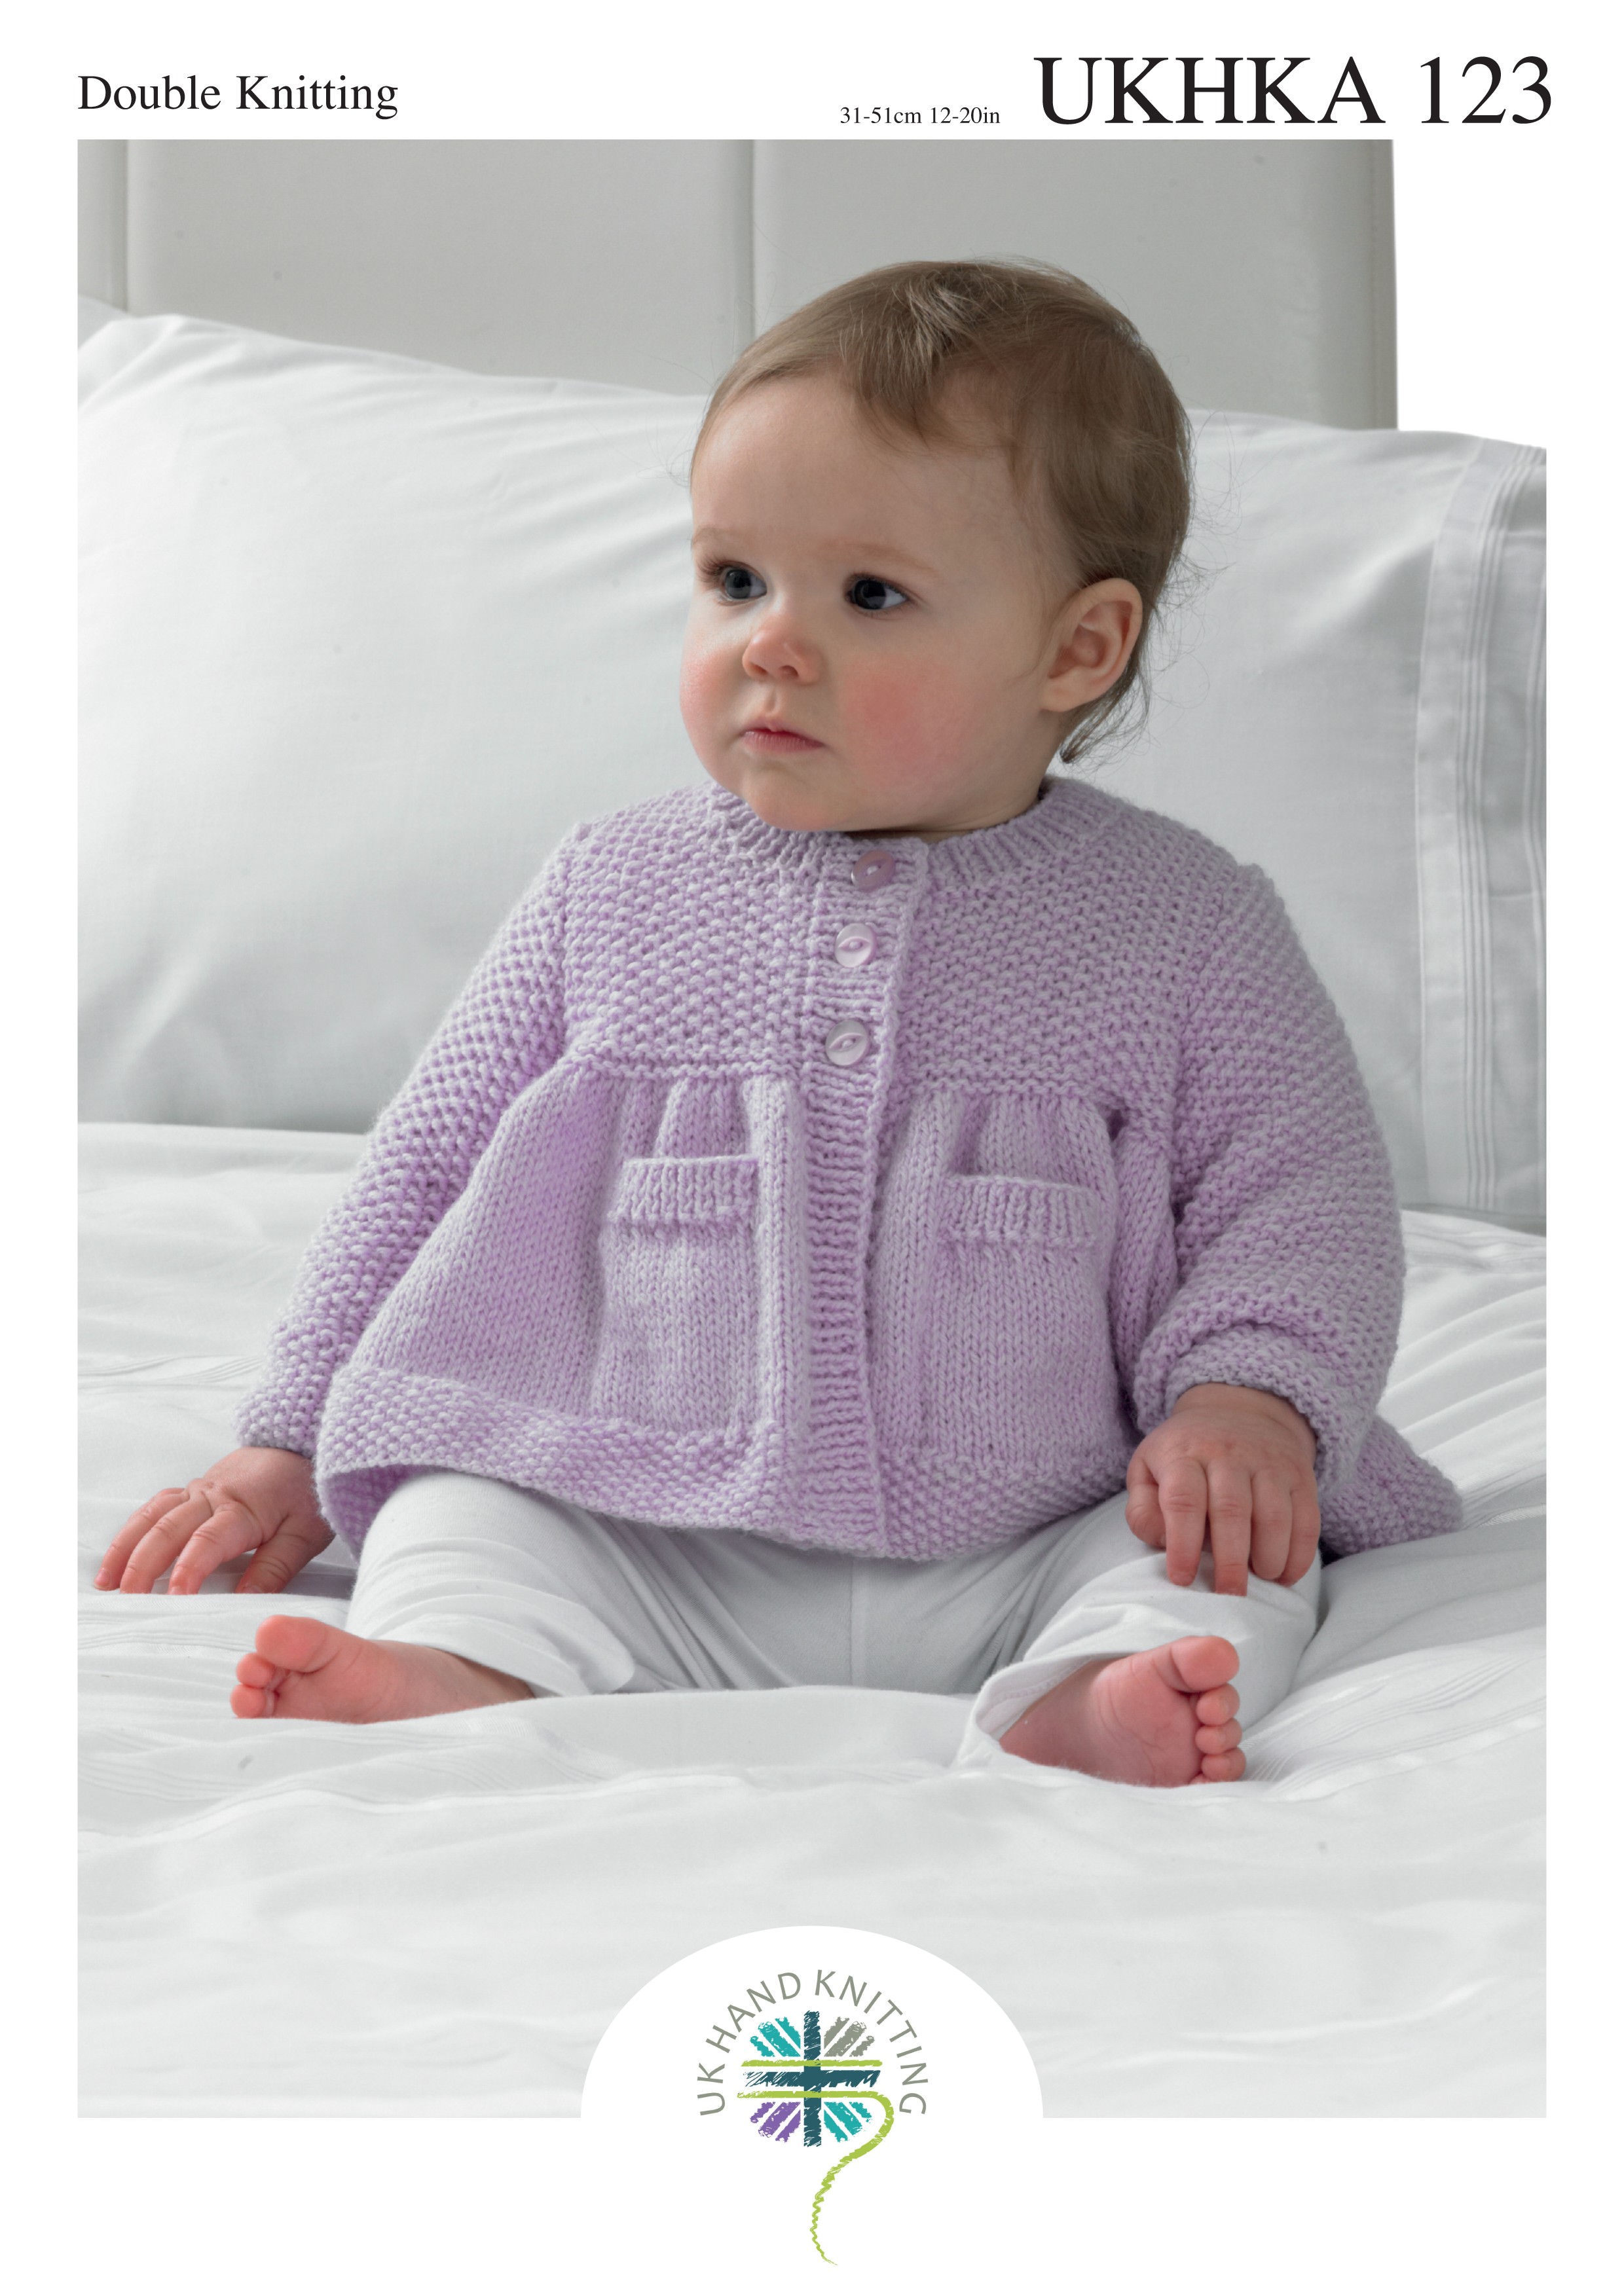 Knitting Pattern - DK Baby Moss Stitch Matinee Coat and Blanket by UKHKA 123